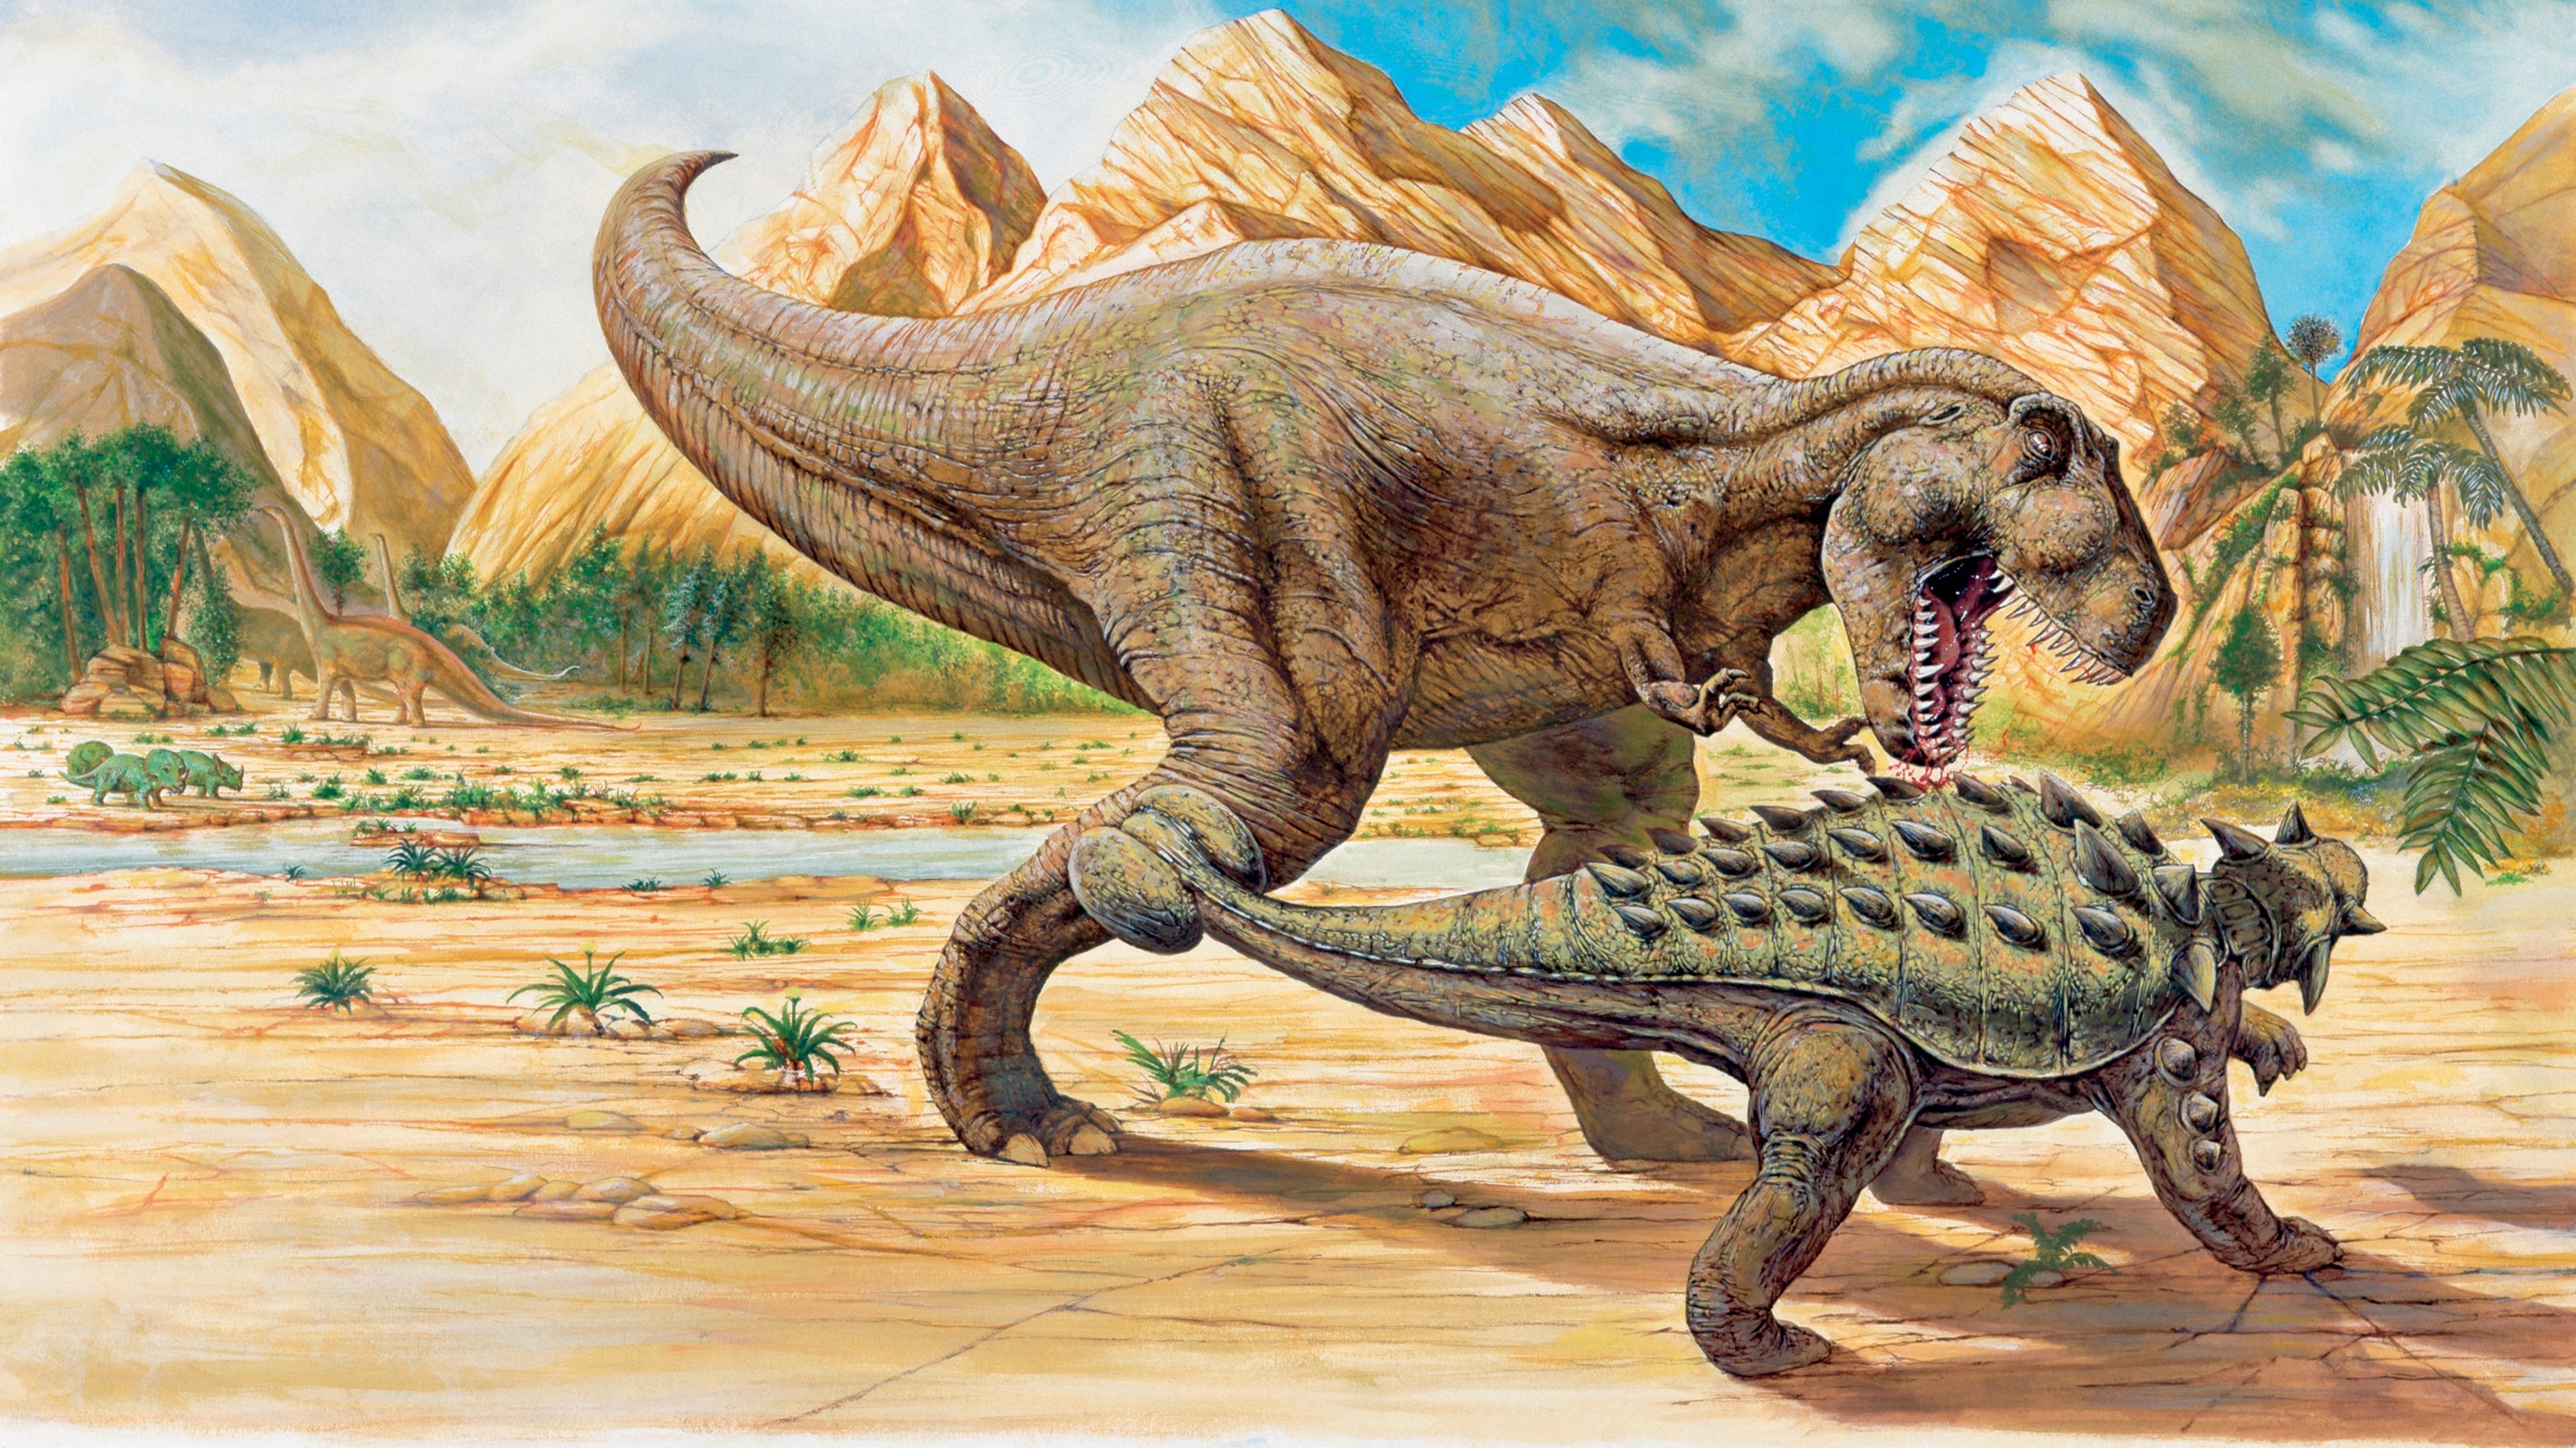 Tyrannosaurus rex and euoplocephalus dinosaurs walking on a landscape